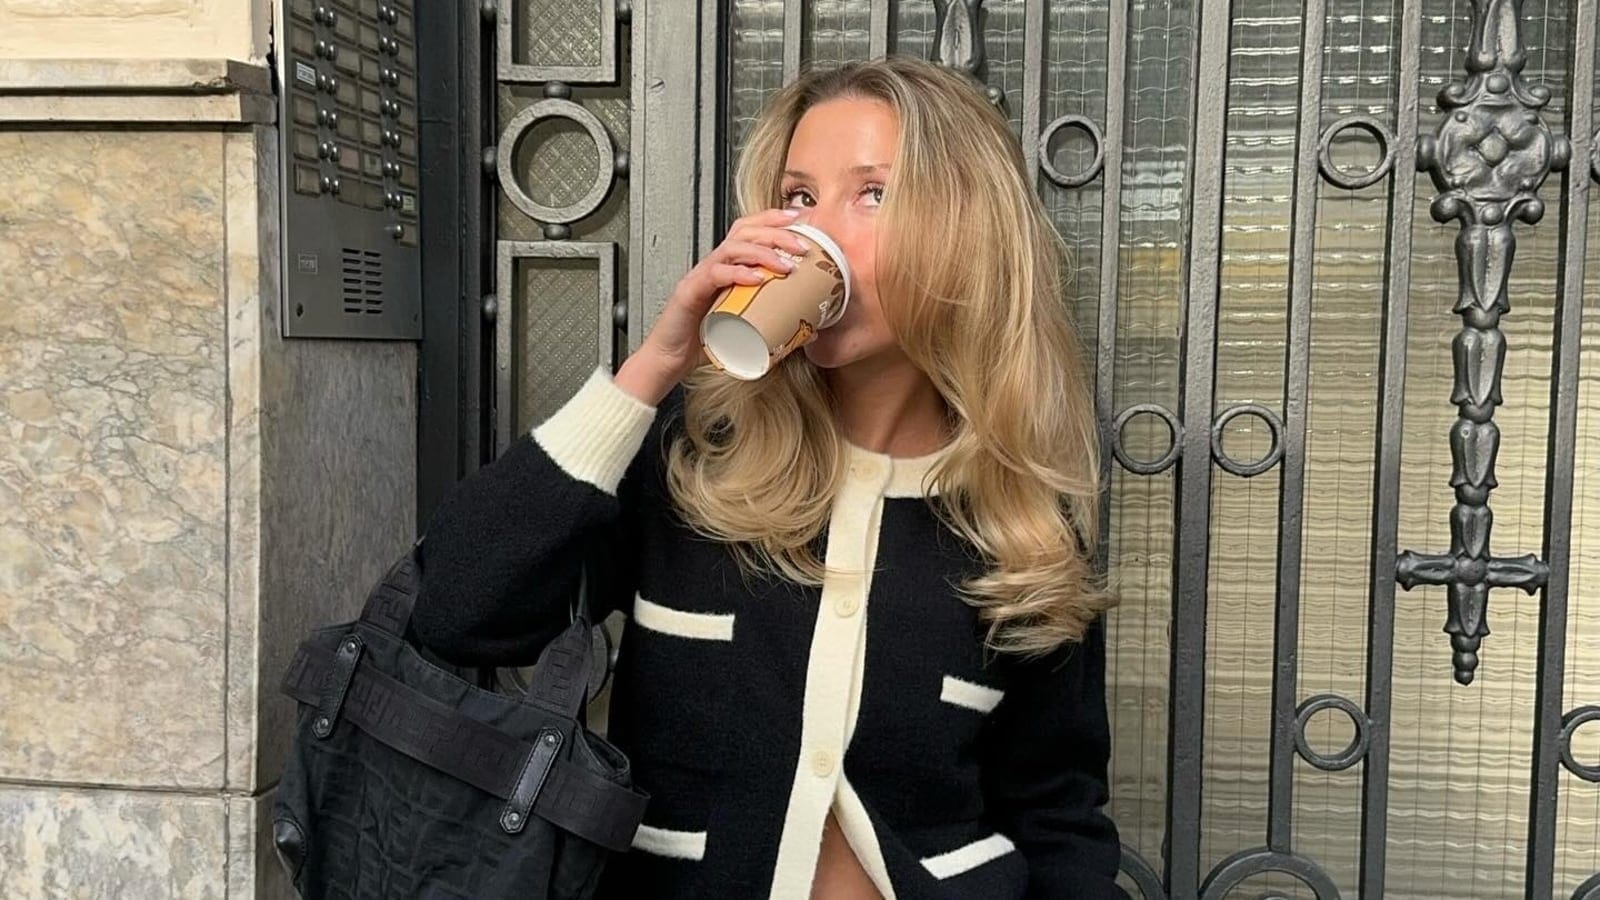 Woman drinks her best friend’s breast milk for bizarre reason, video has internet cringing